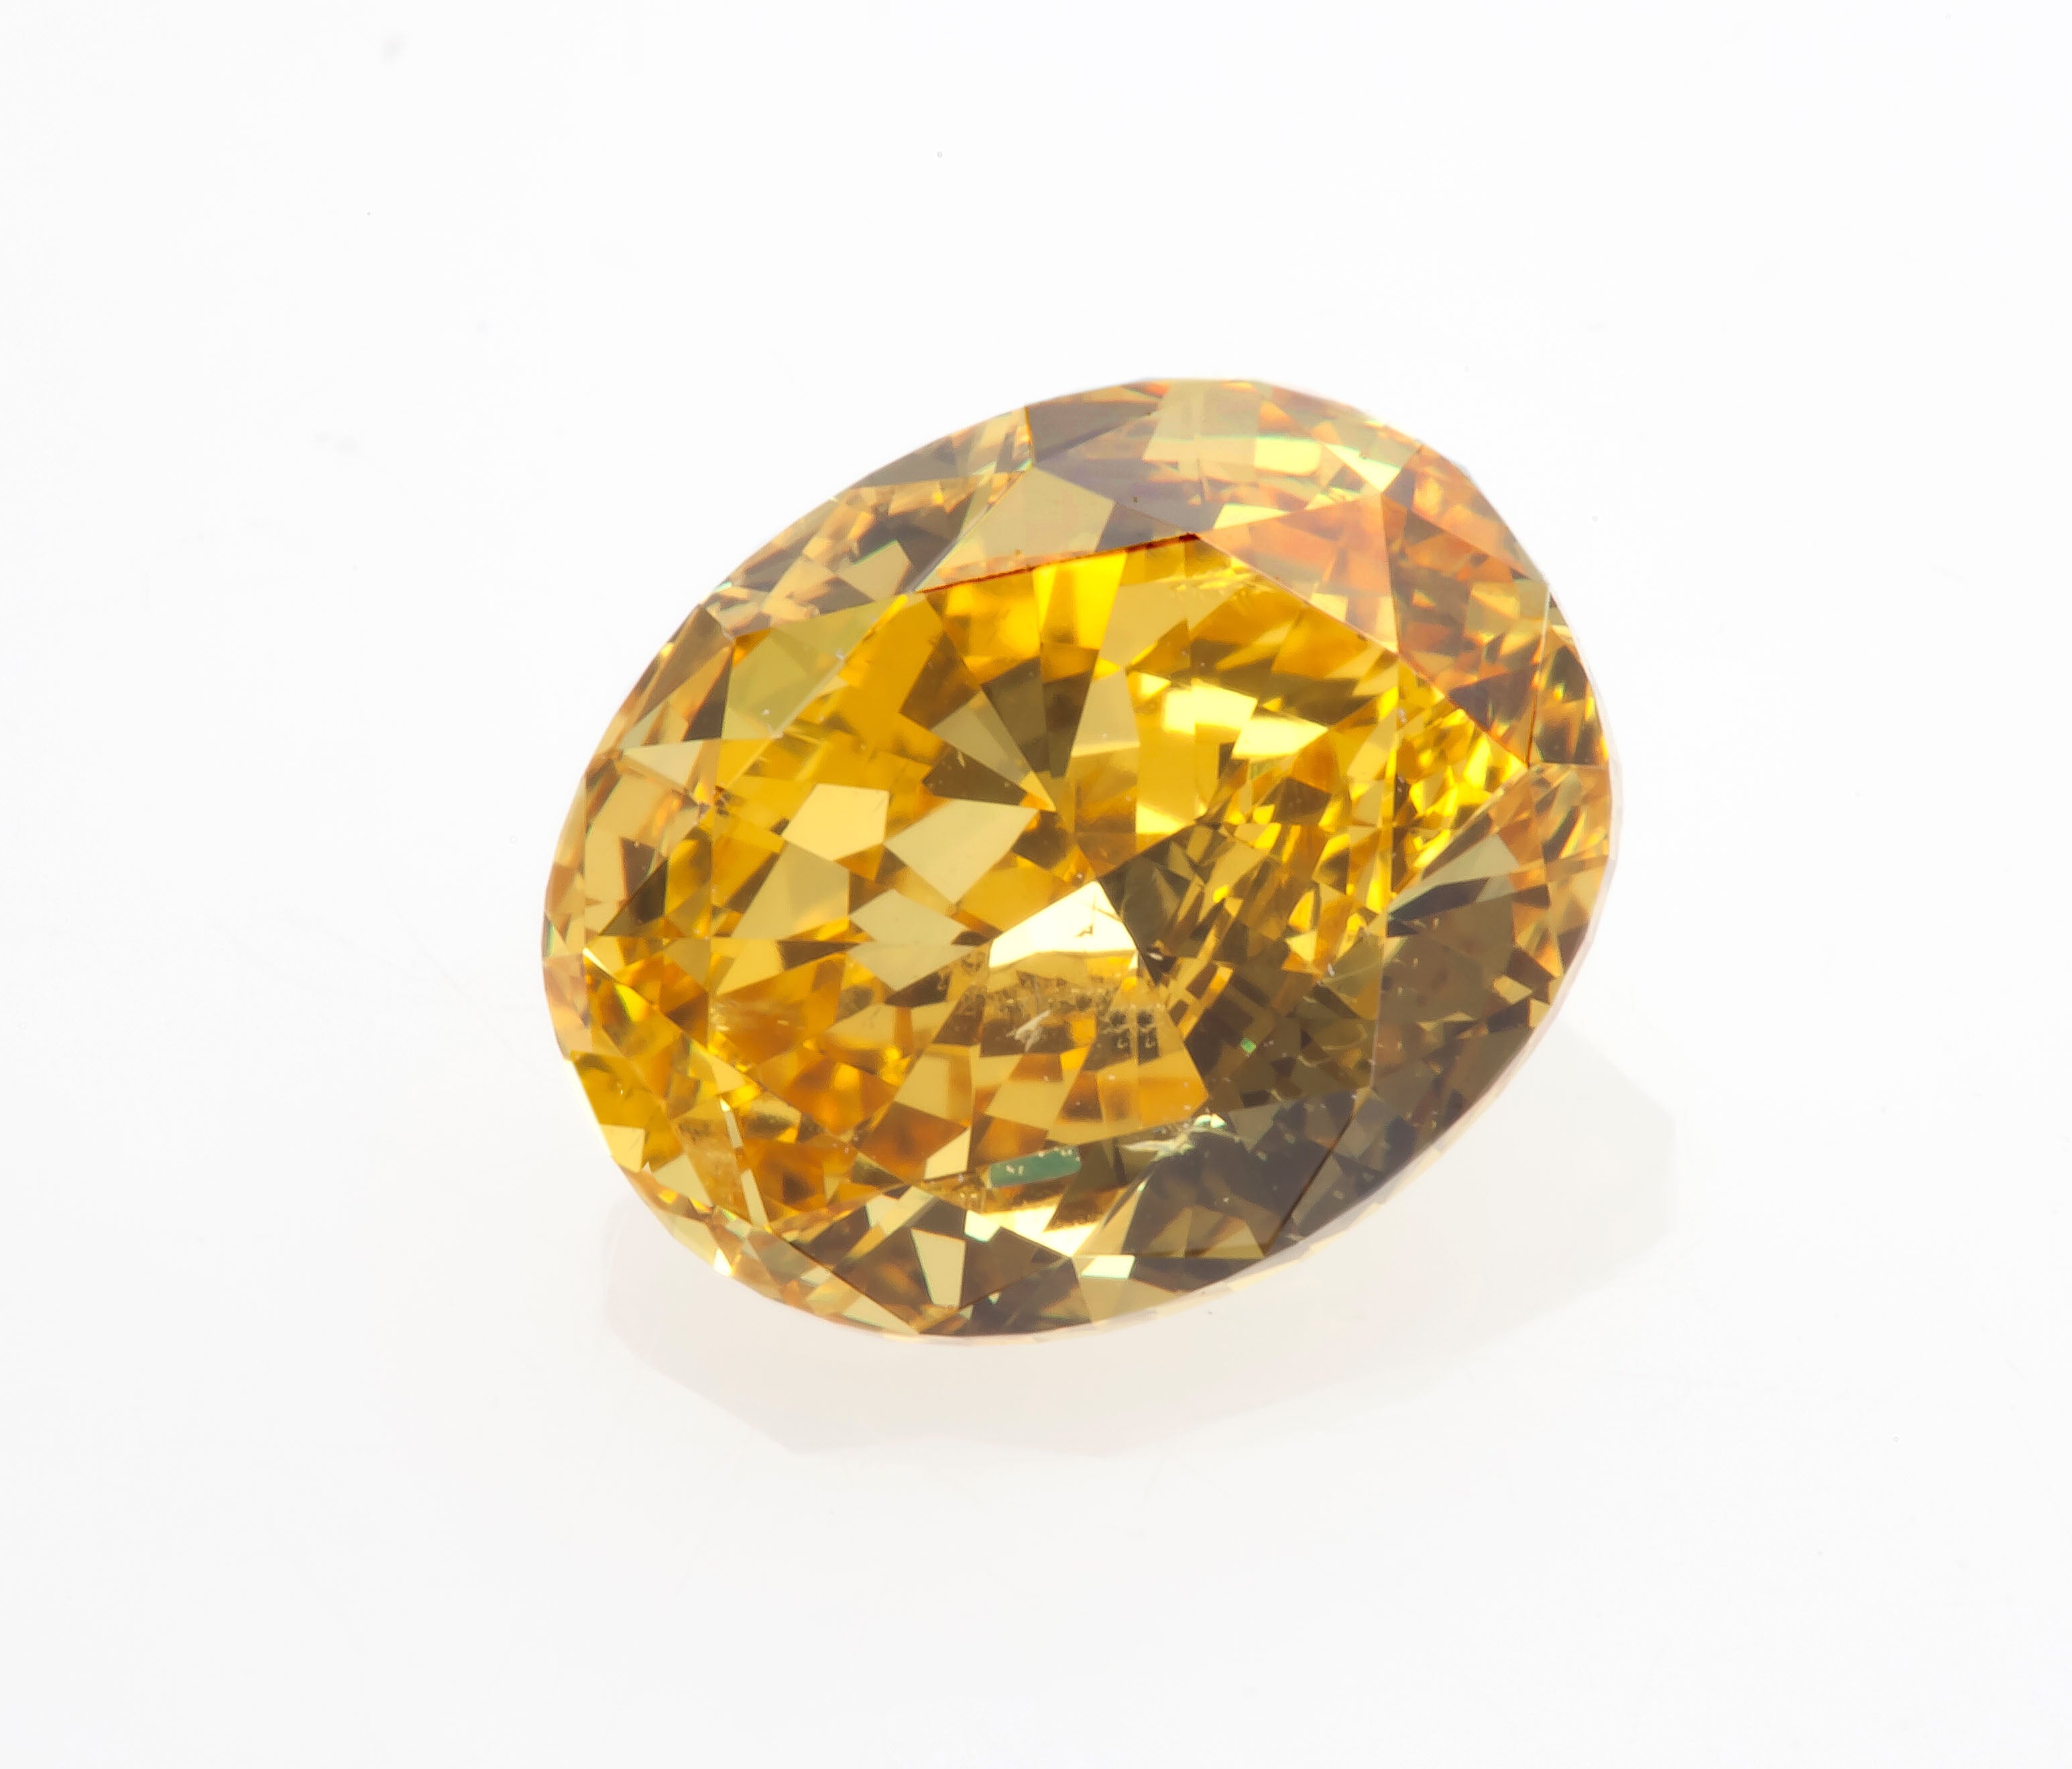 Fancy Vivid Orangy Yellow diamond with GIA certificate from Langerman Diamonds